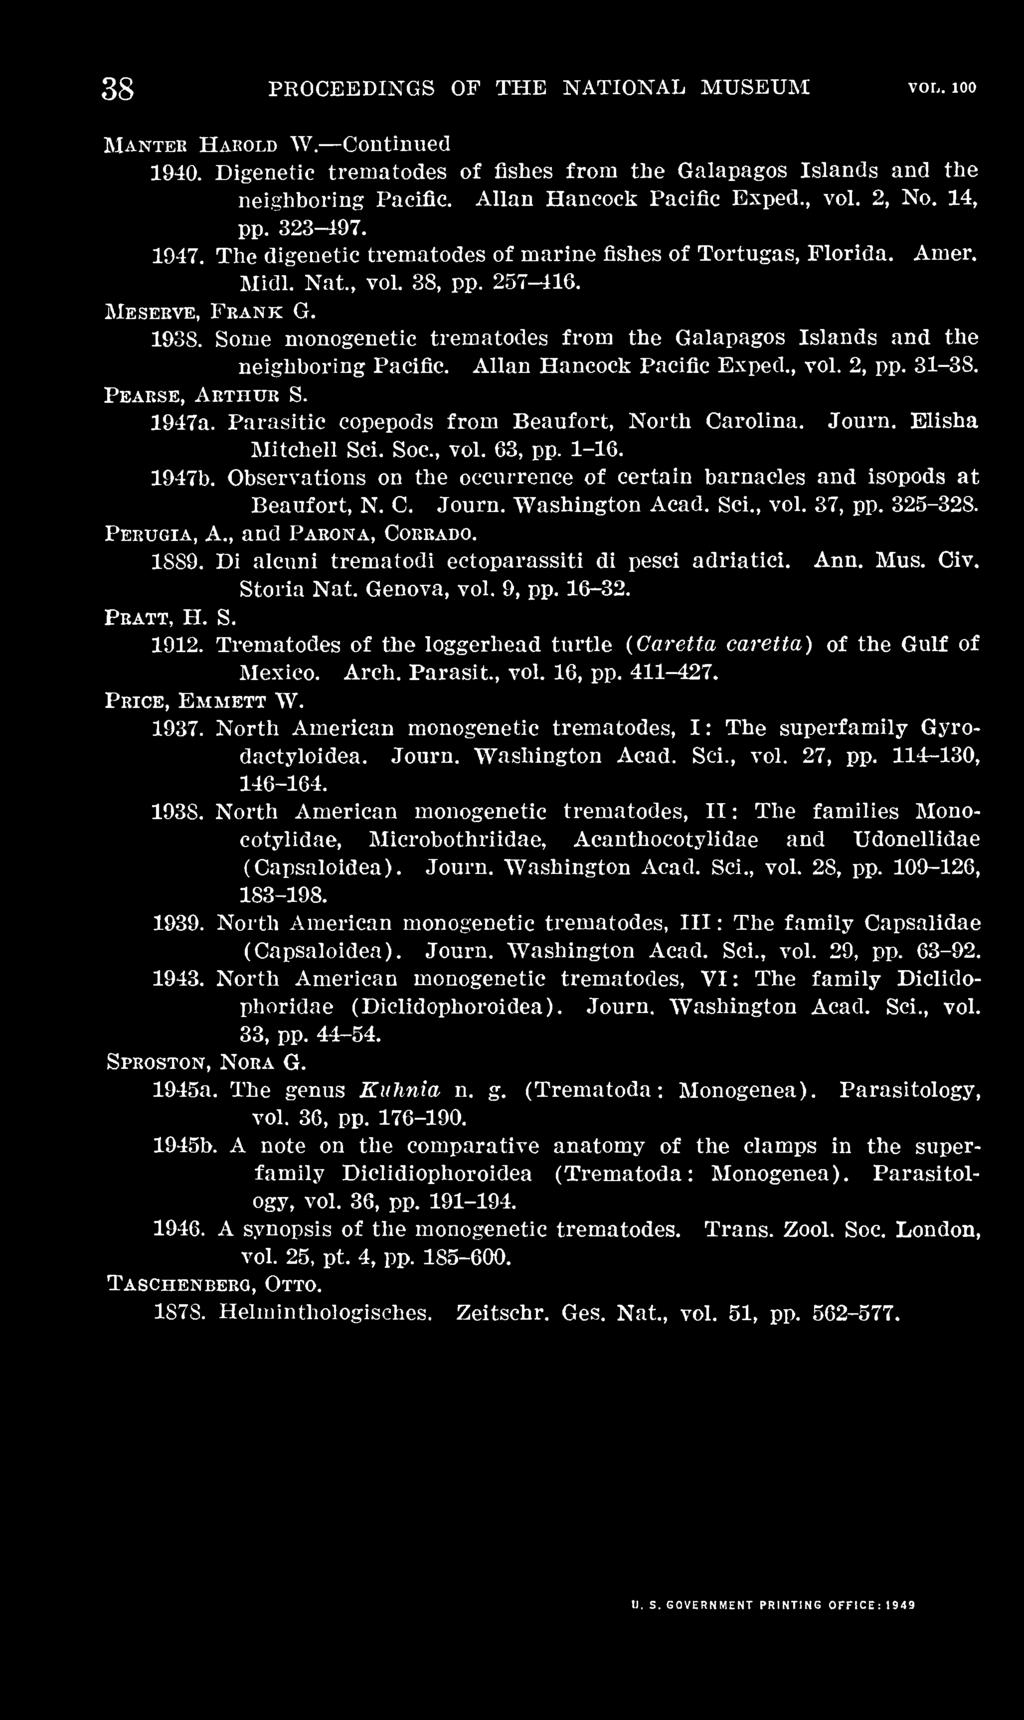 Sci., vol. 37, pp. 325-328. Perugia, A., and Parona, Coreado. 1889. Di alcuni trematodi ectoparassiti di pesci adriatici. Ann. Mus. Civ. Pratt, H. S. Storia Nat. Genova, vol. 9, pp. 16-32. 1912.